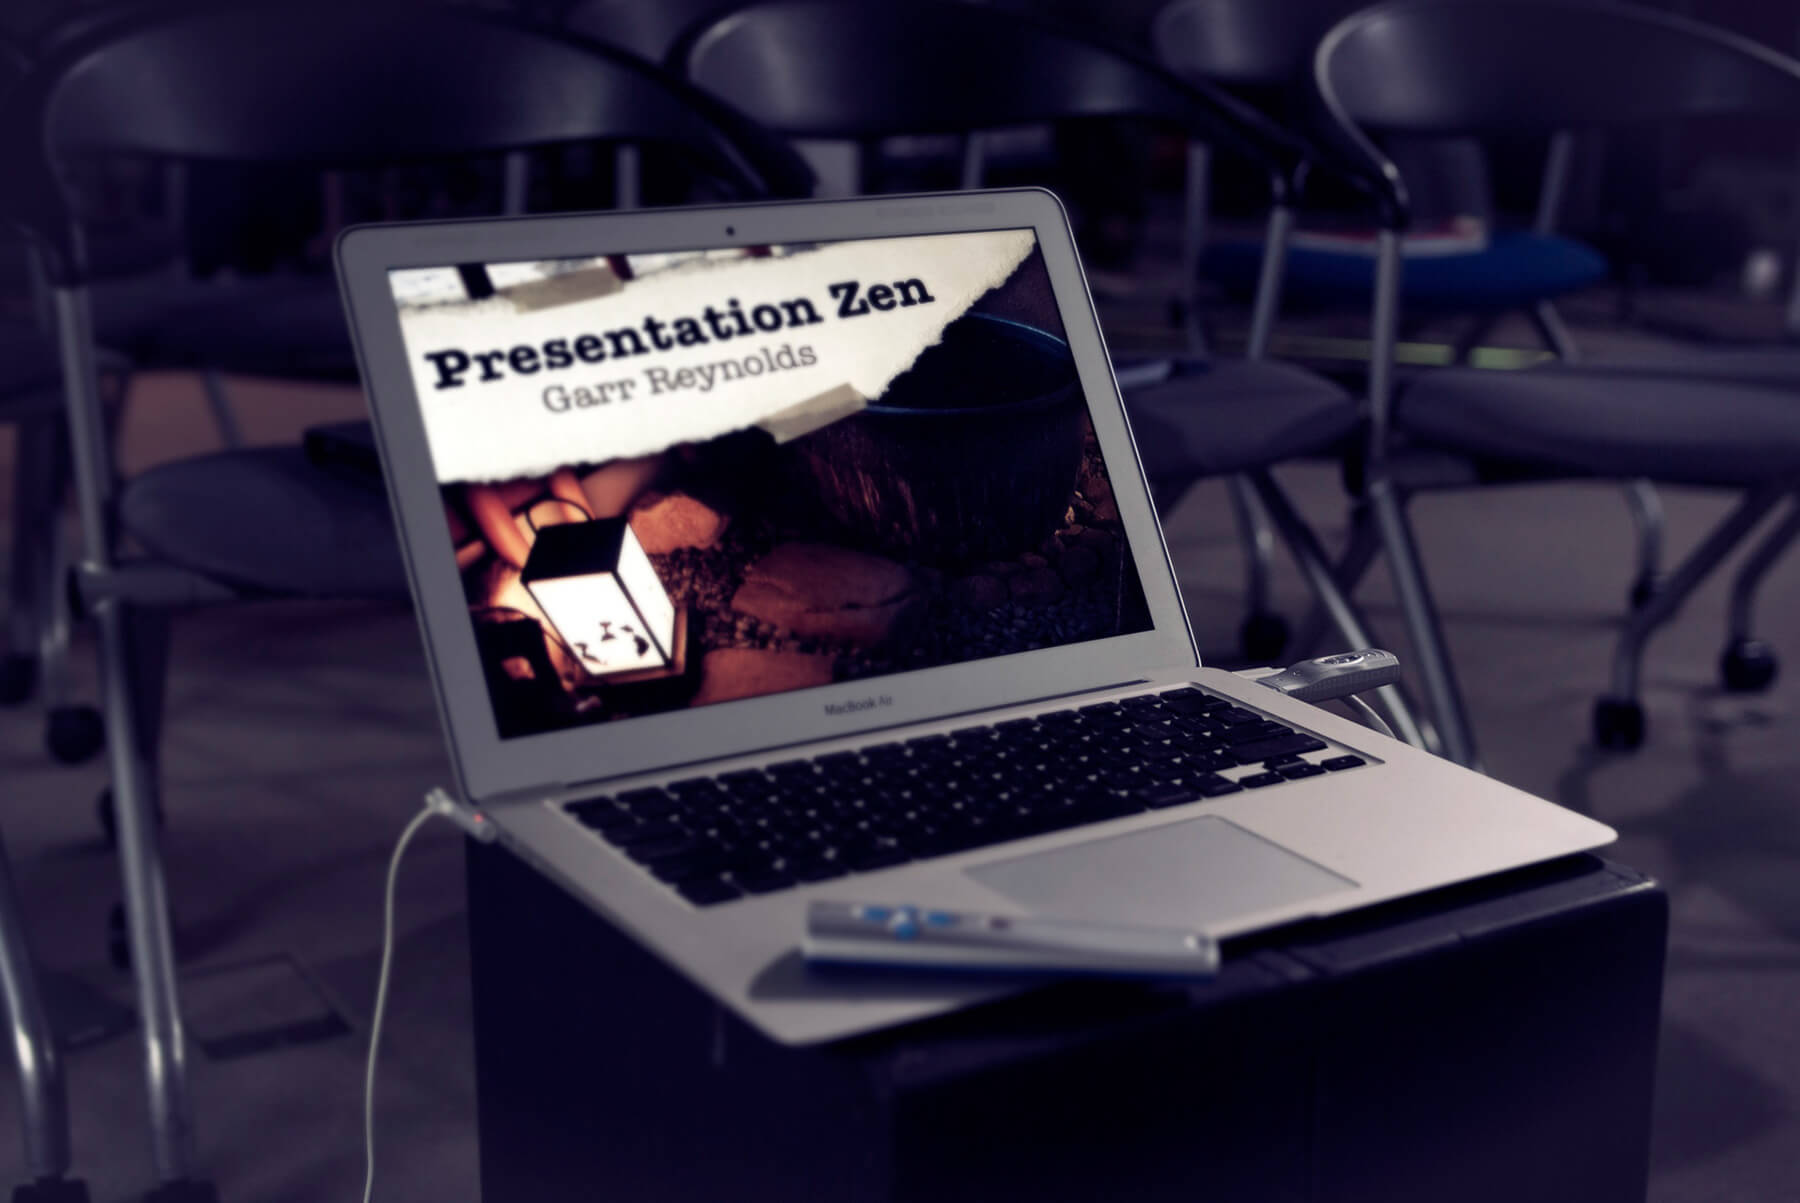 Top Ten Slide Tips | Garr Reynolds Official Site With Regard To Presentation Zen Powerpoint Templates